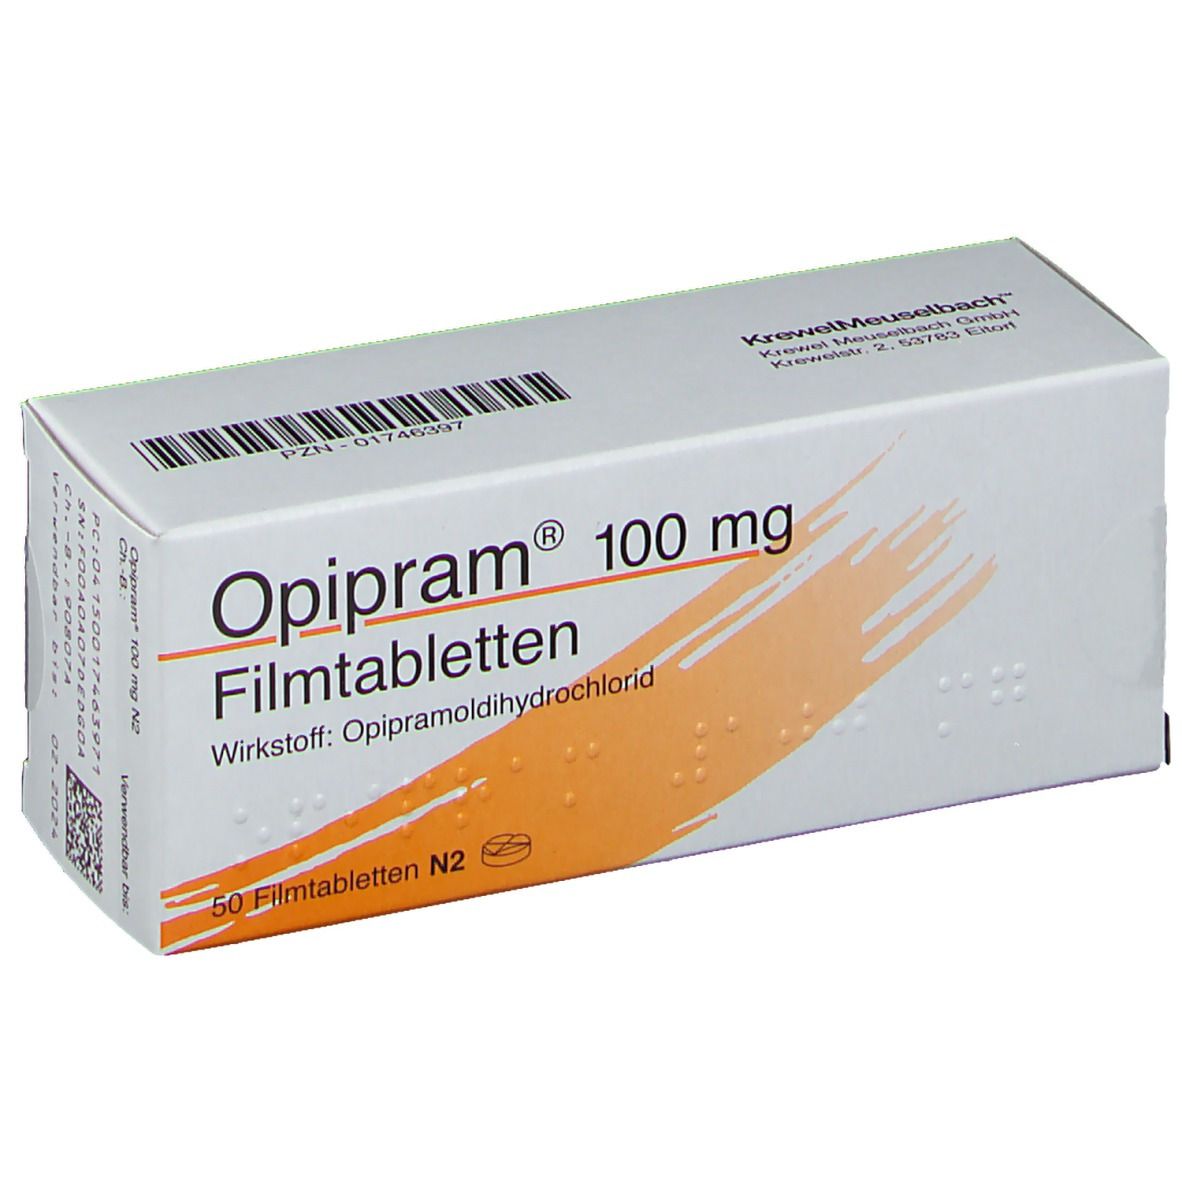 Opipram® 100 mg